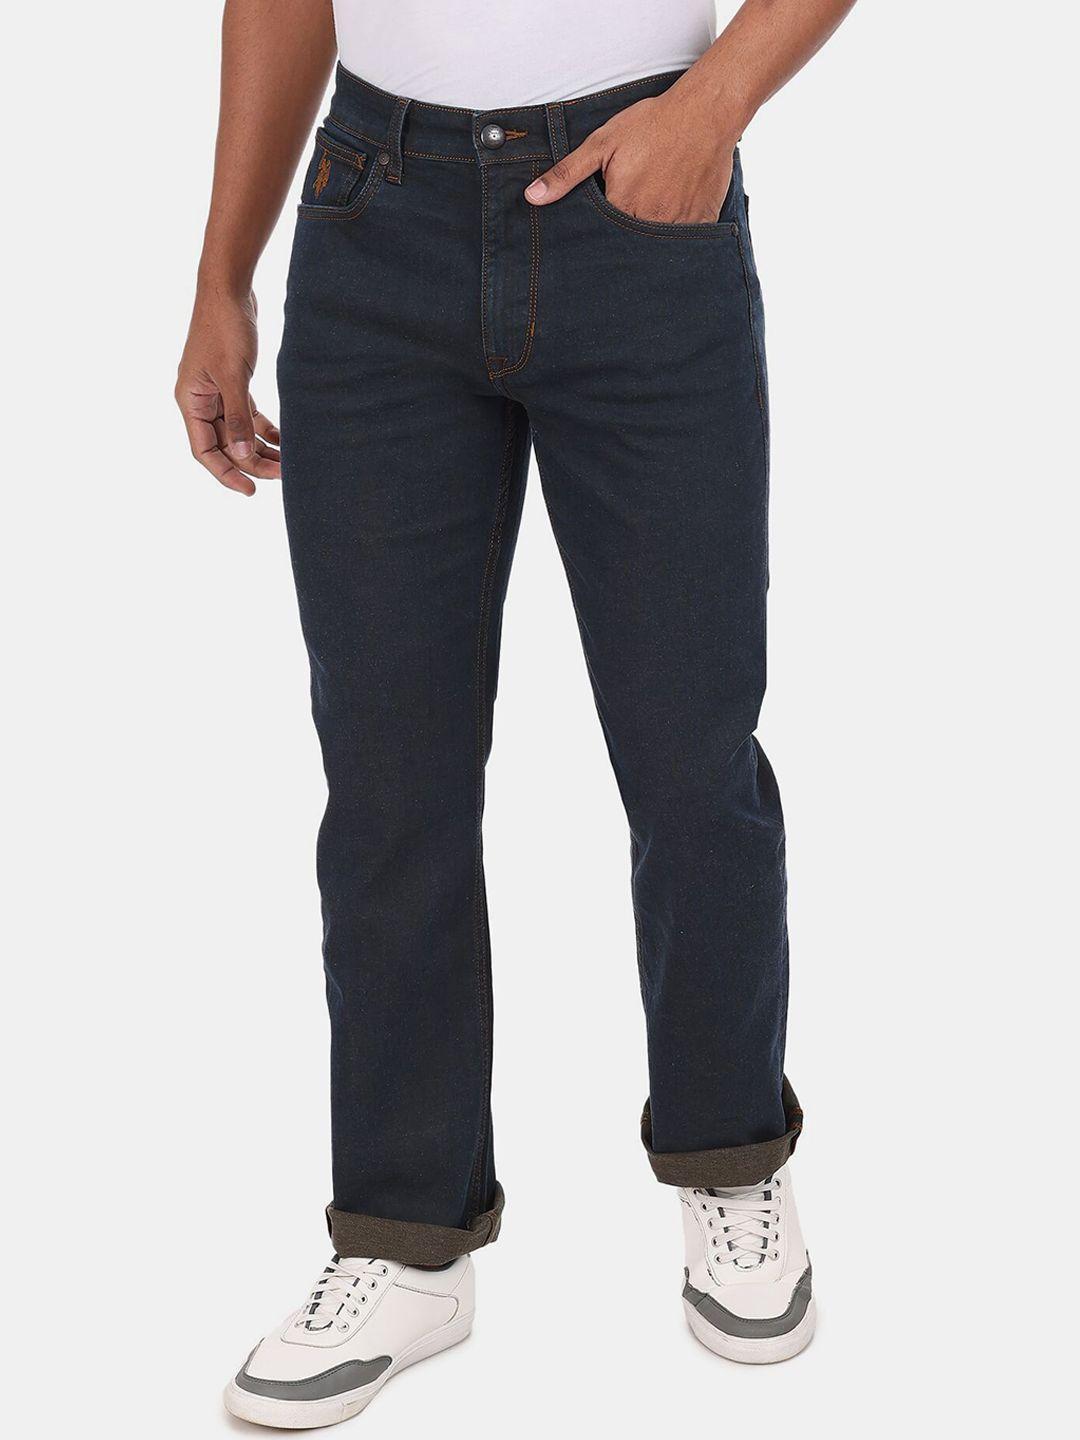 u s polo assn denim co men blue regular fit jeans